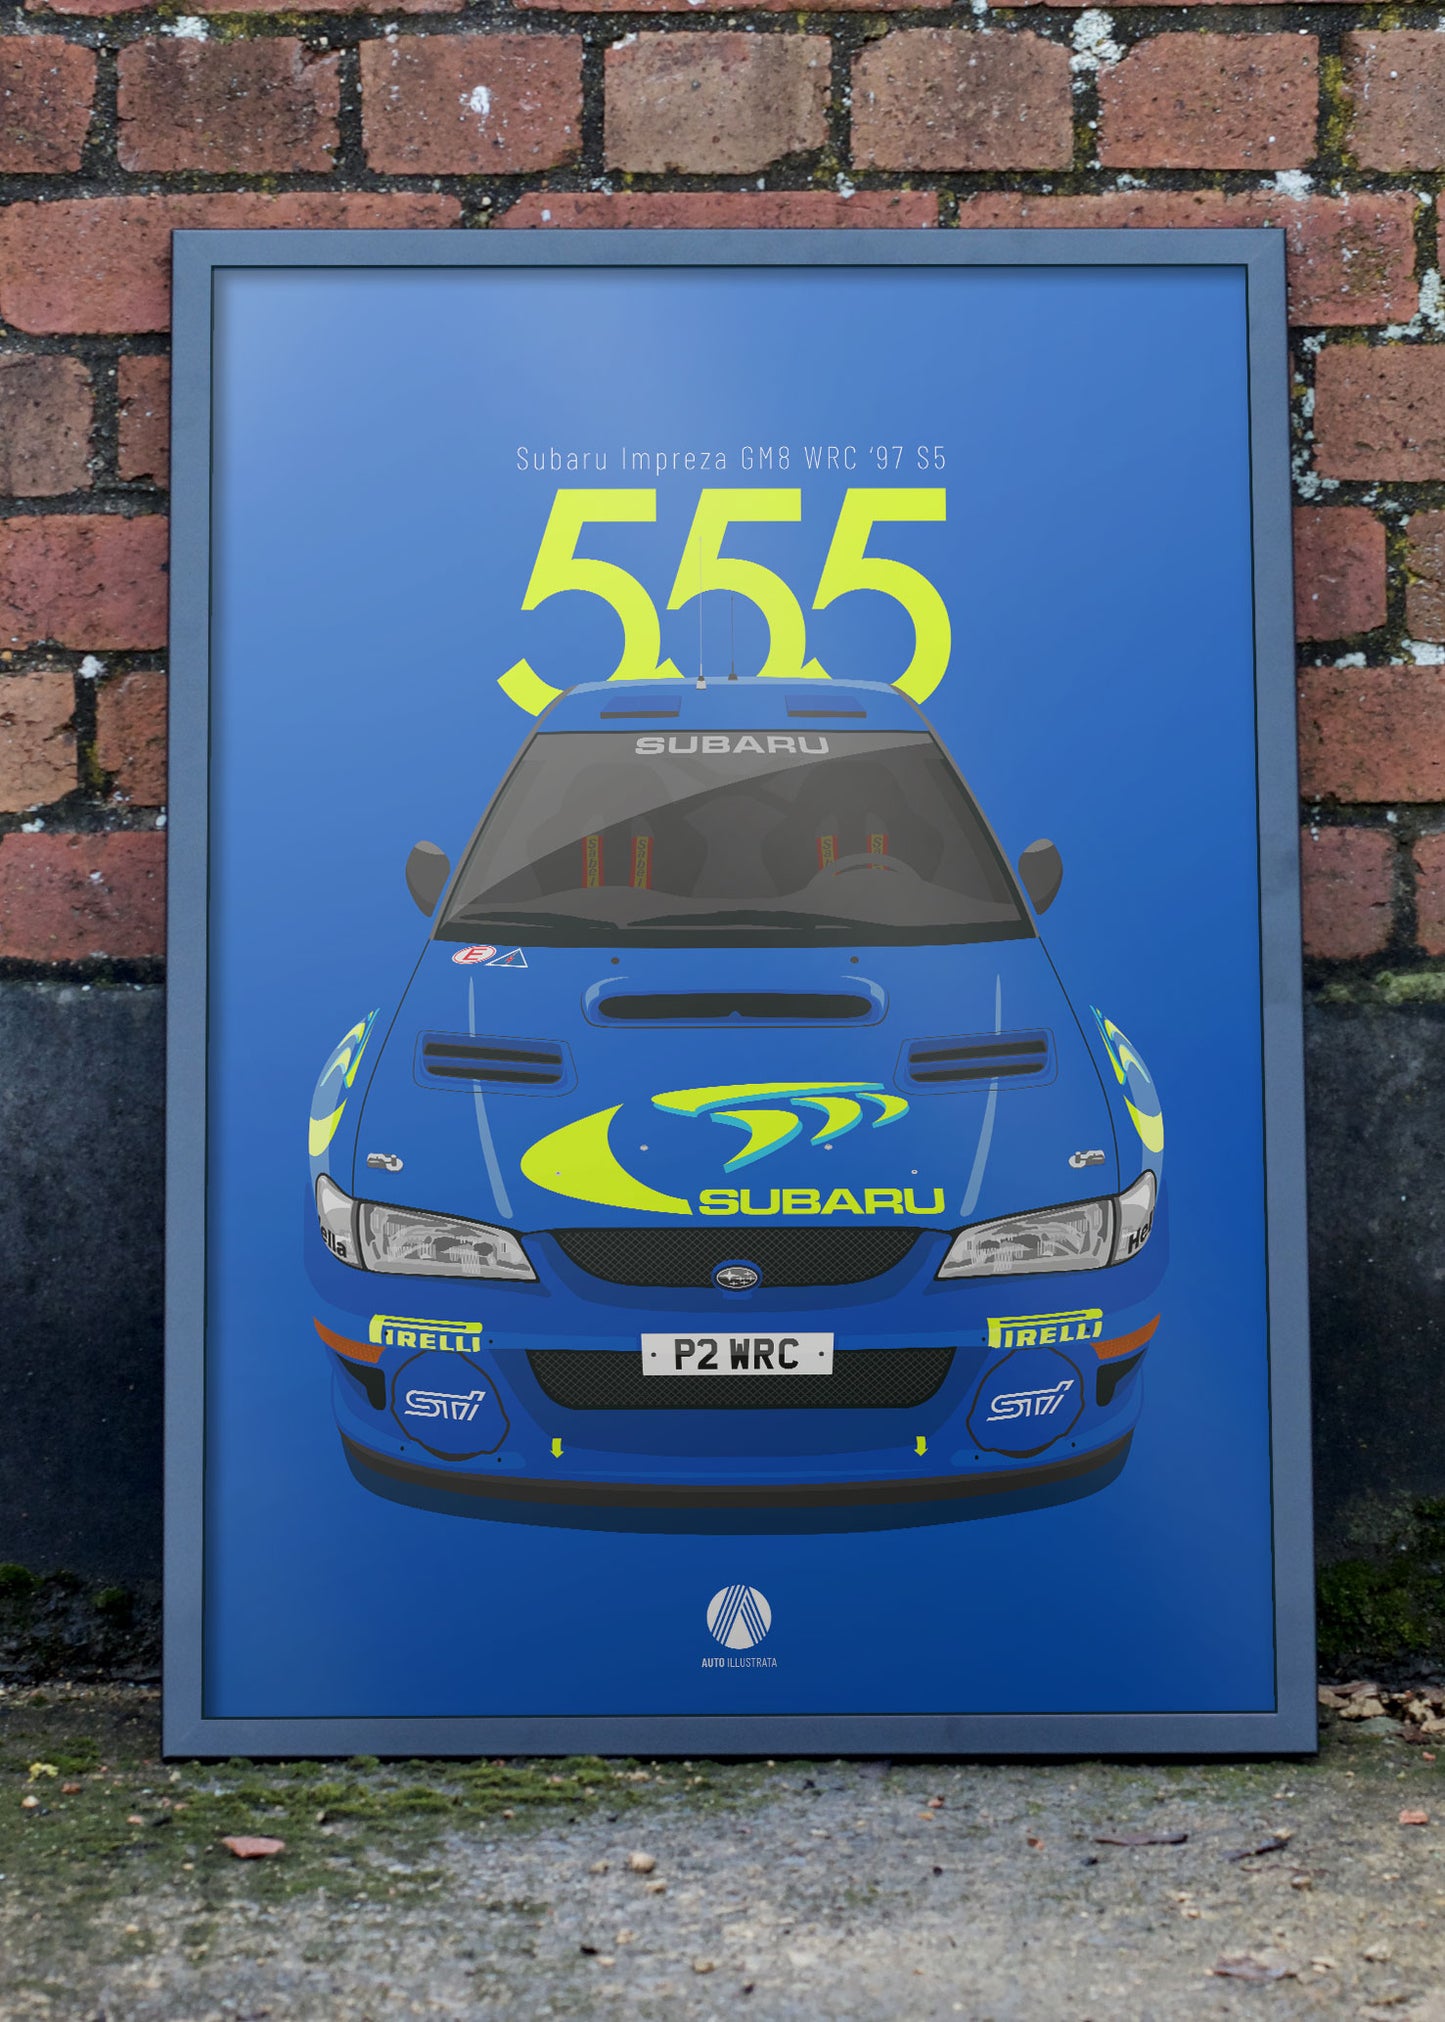 1997 Subaru Impreza GM8 WRC '97 S5 - poster print